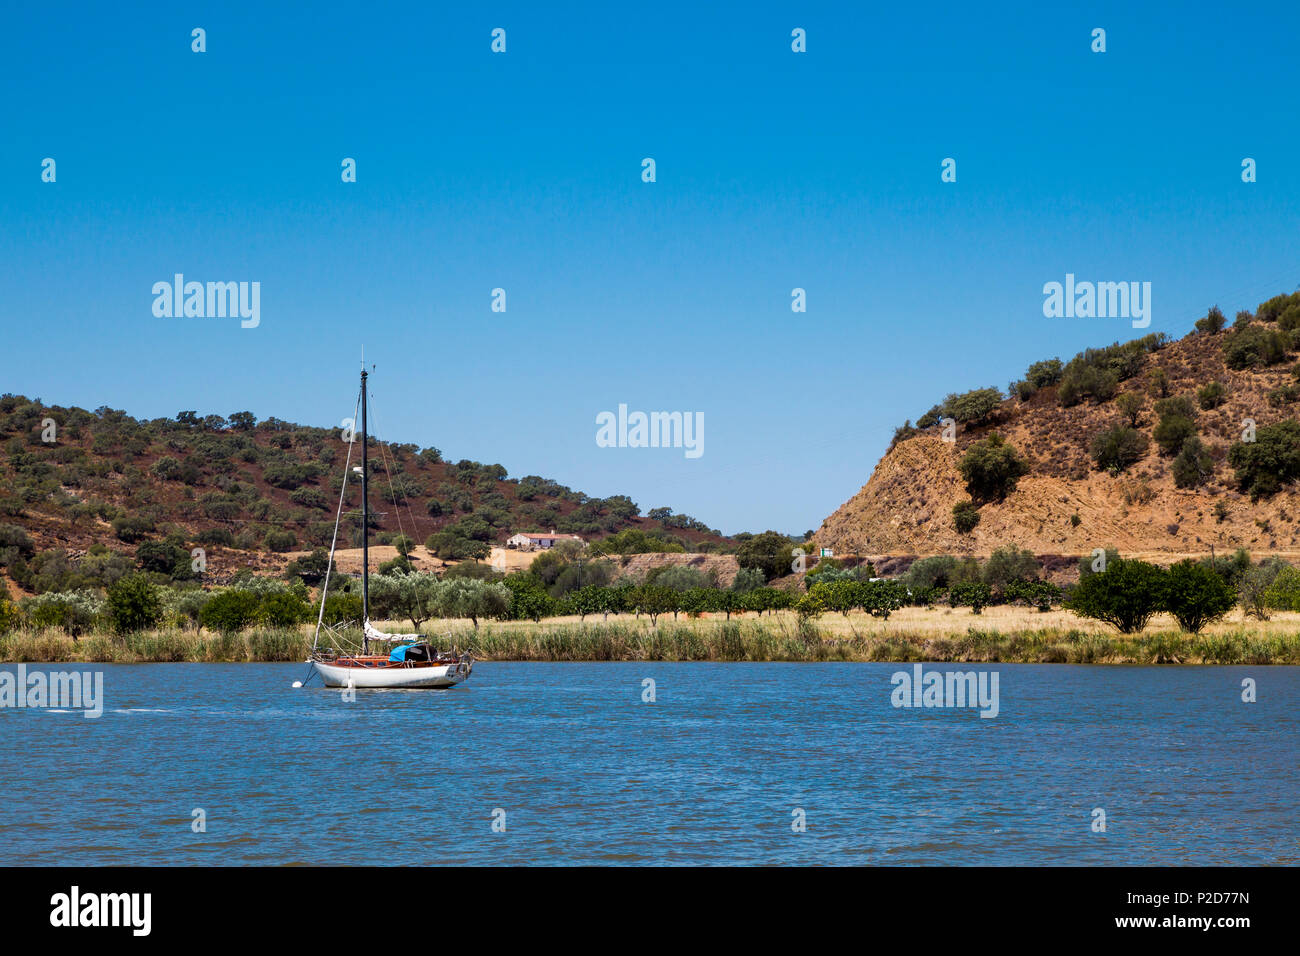 Boat trip on the Guadiana border river, Algarve, Portugal Stock Photo